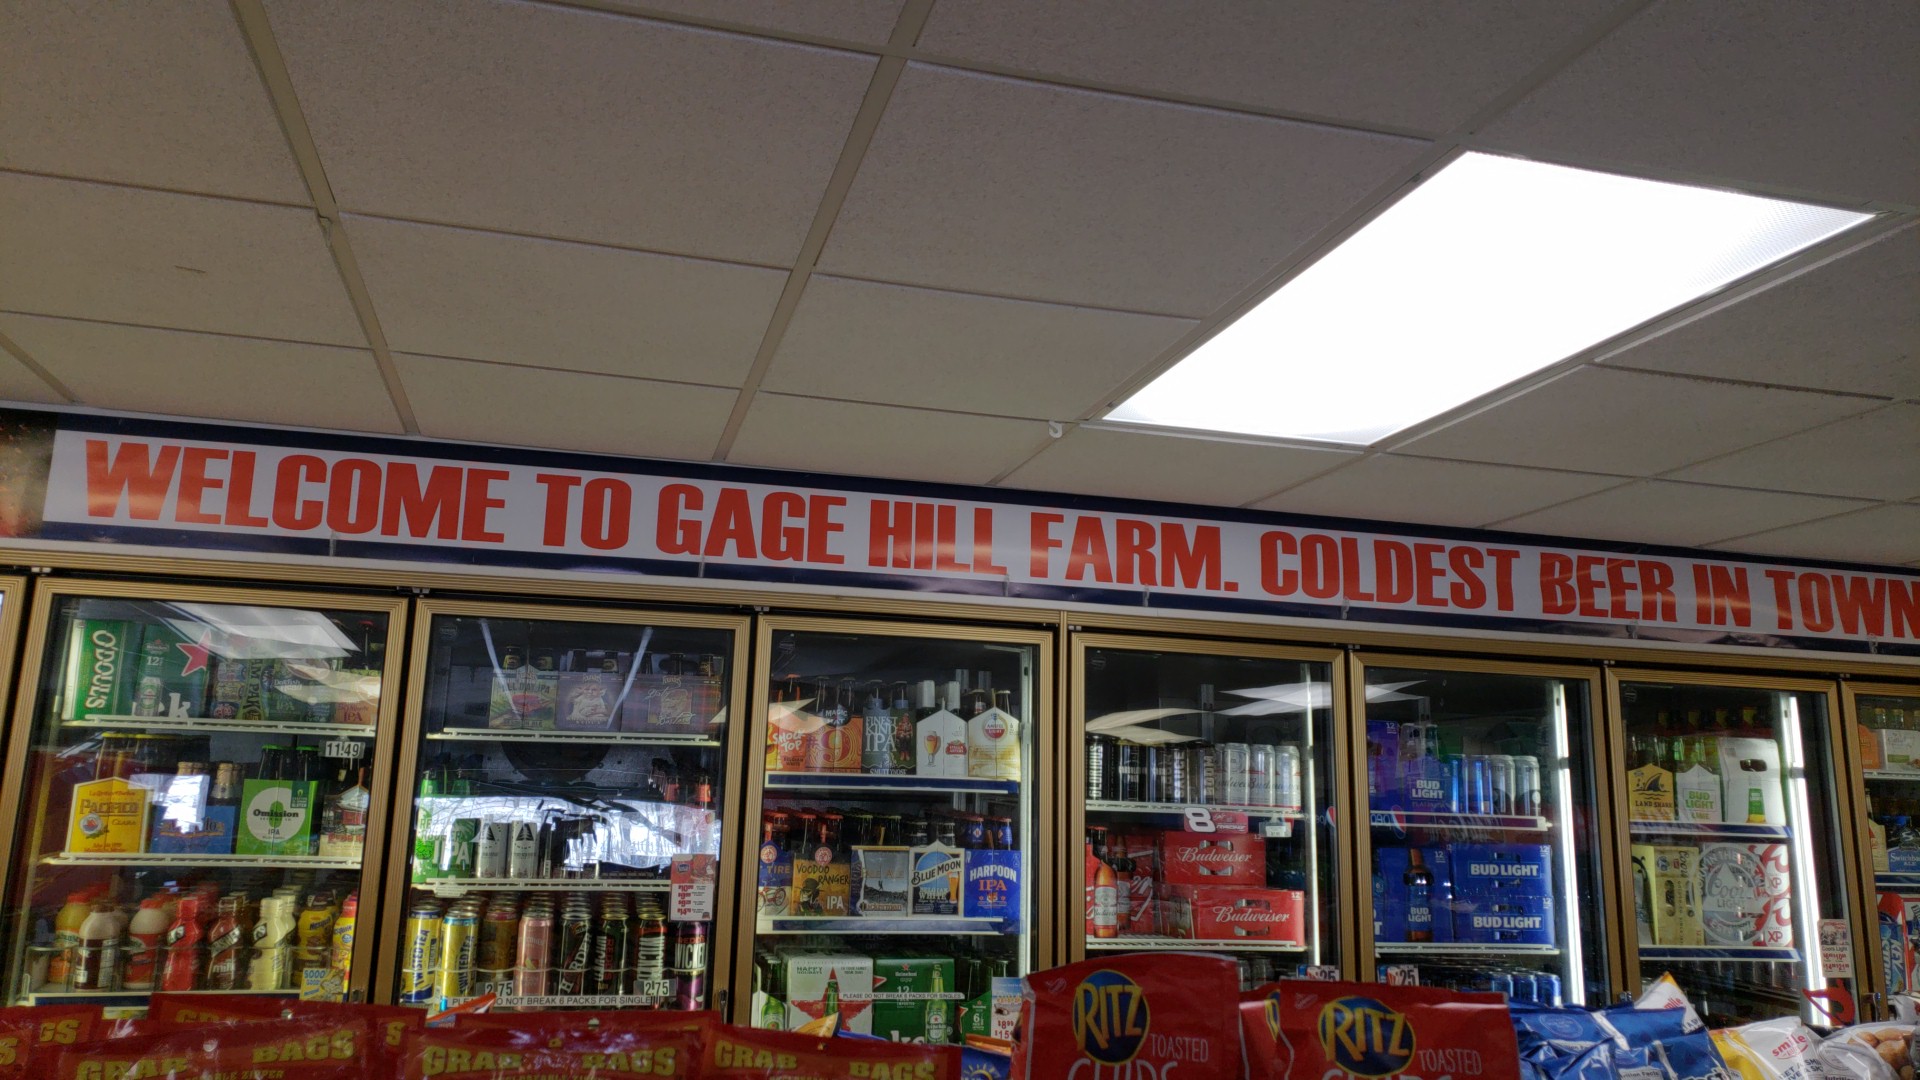 Gage Hill Farm Convenience Store